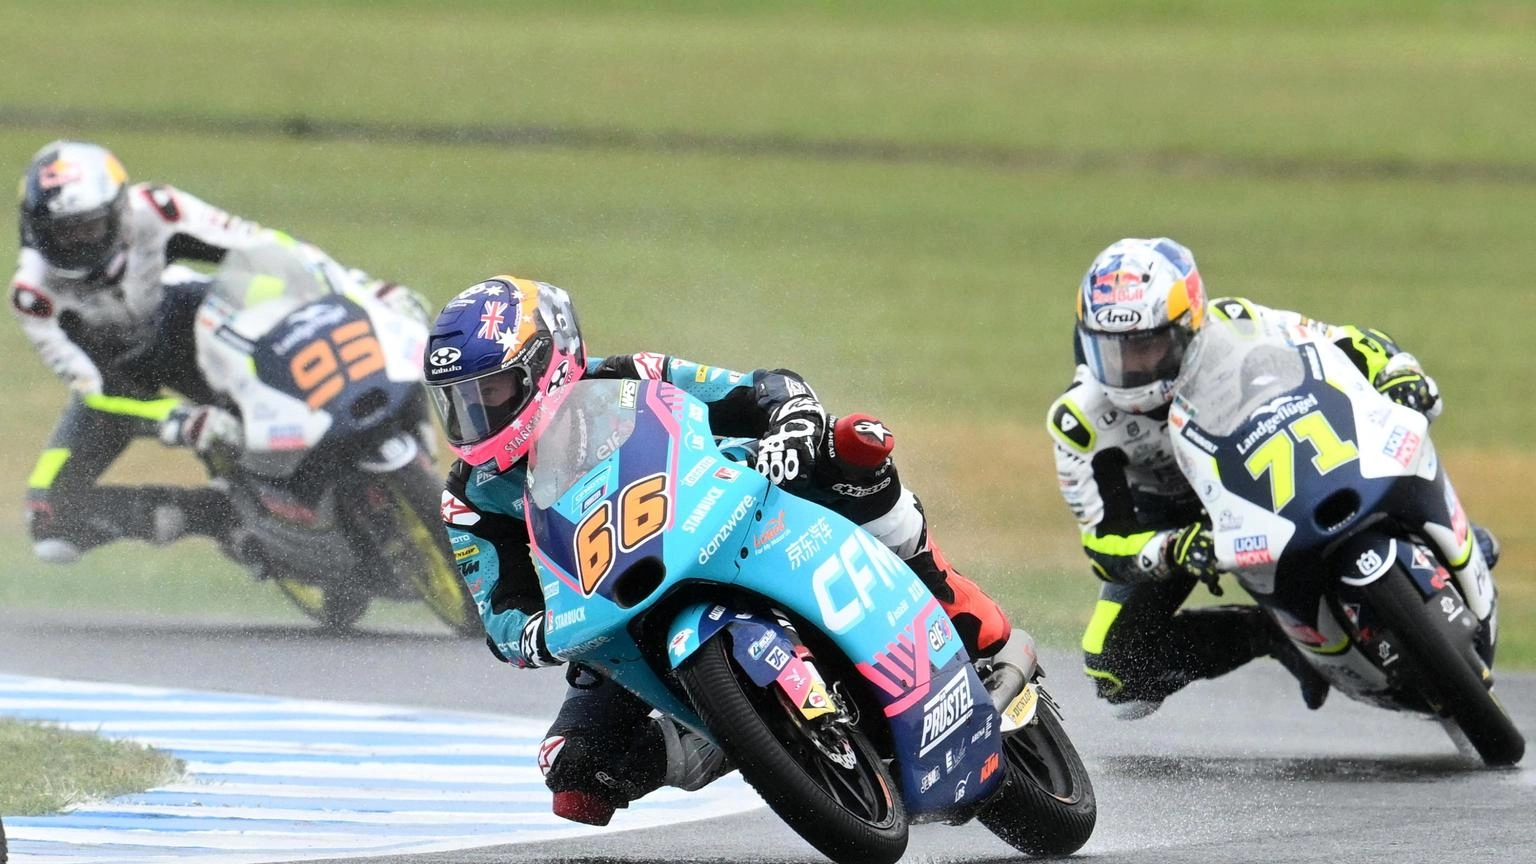 Moto: Australia; annullata la gara sprint causa maltempo